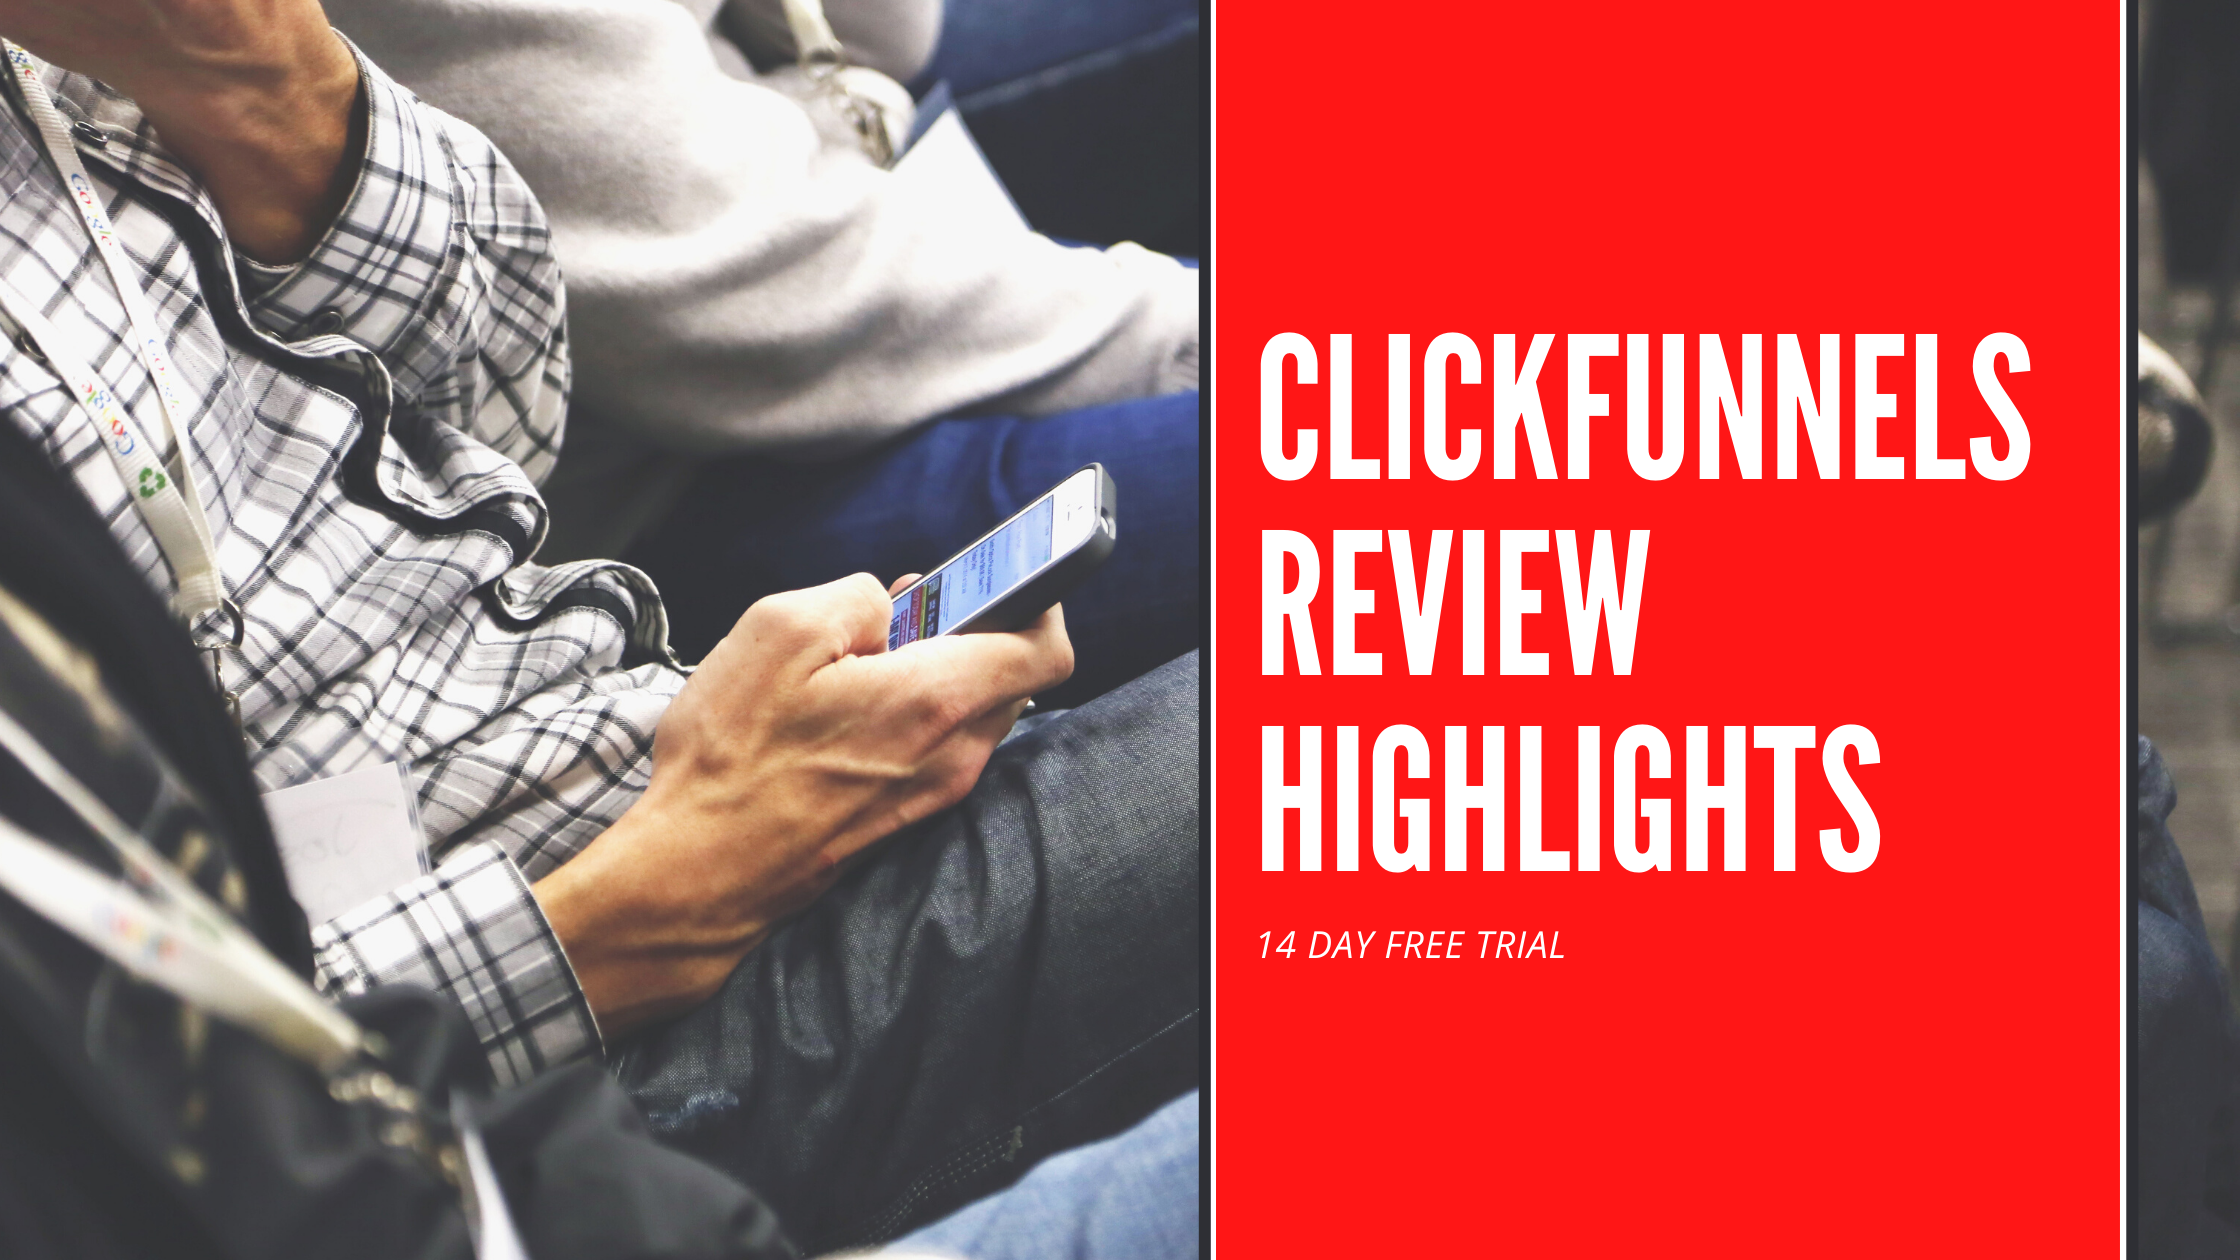 ClickFunnels Review Highlights